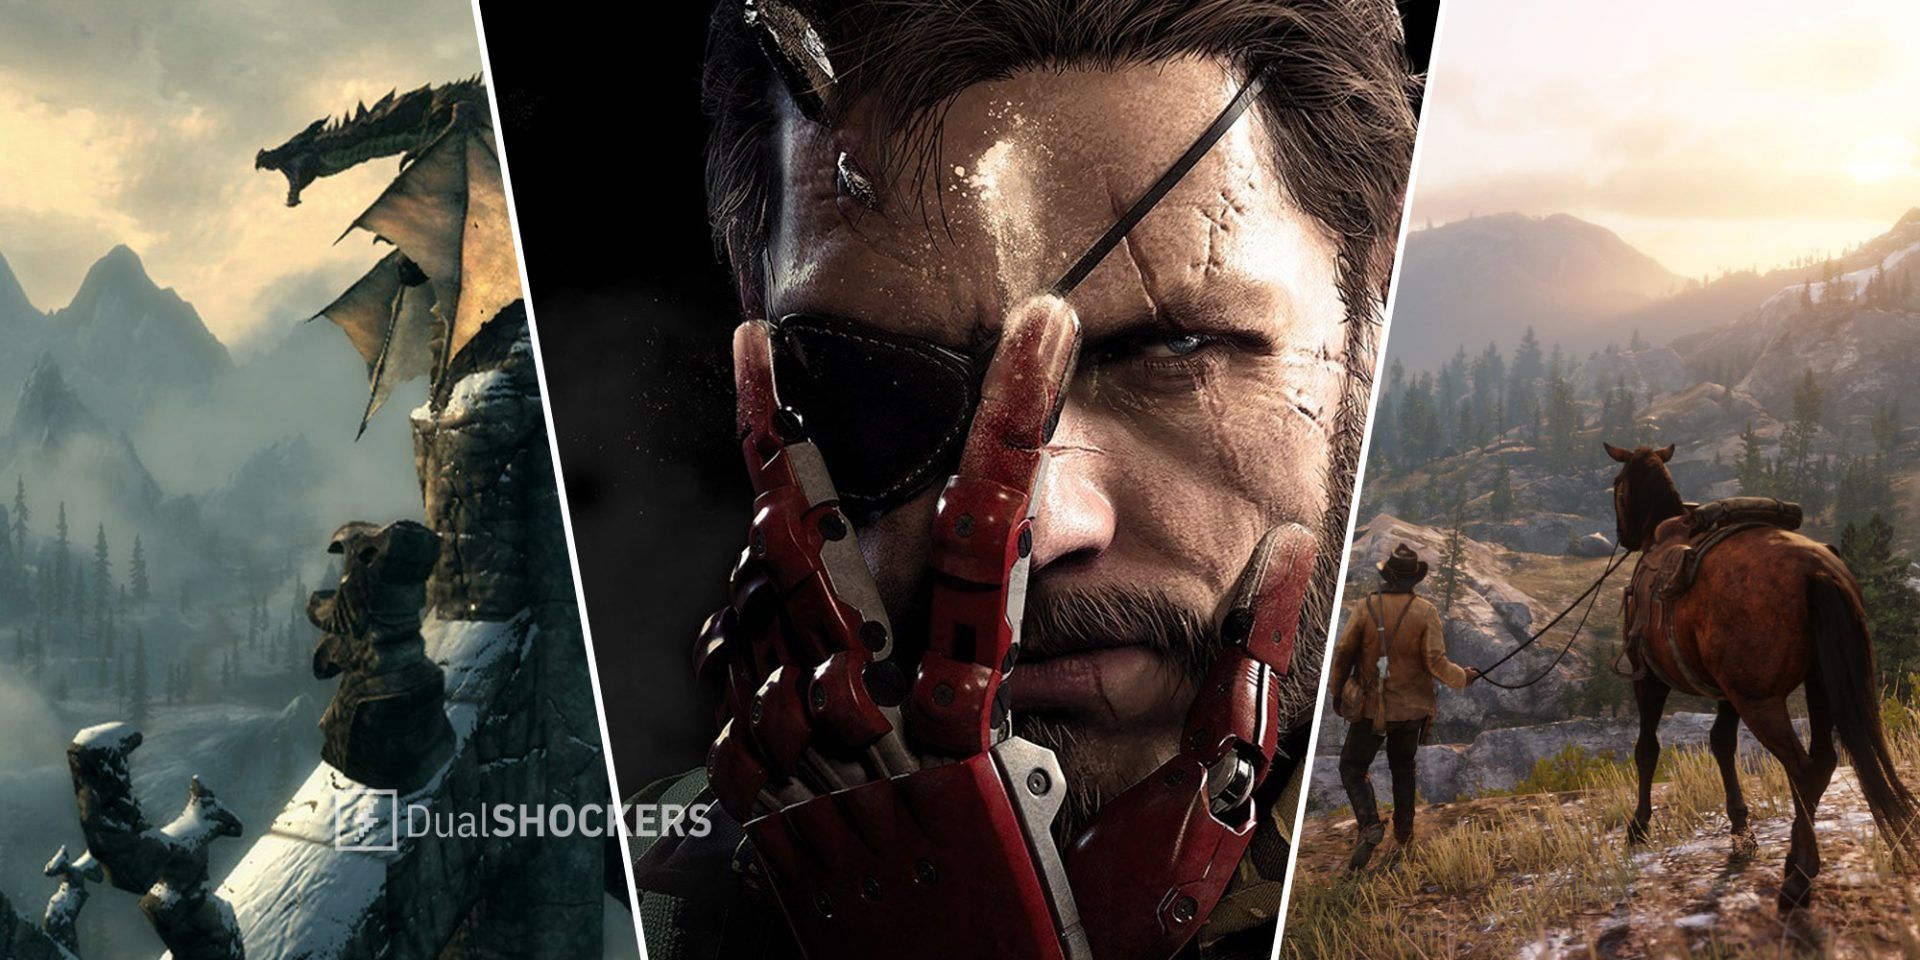 The Elder Scrolls V Skyrim on left, Metal Gear Solid V: The Phantom Pain in middle, Red Dead Redemption 2 on right